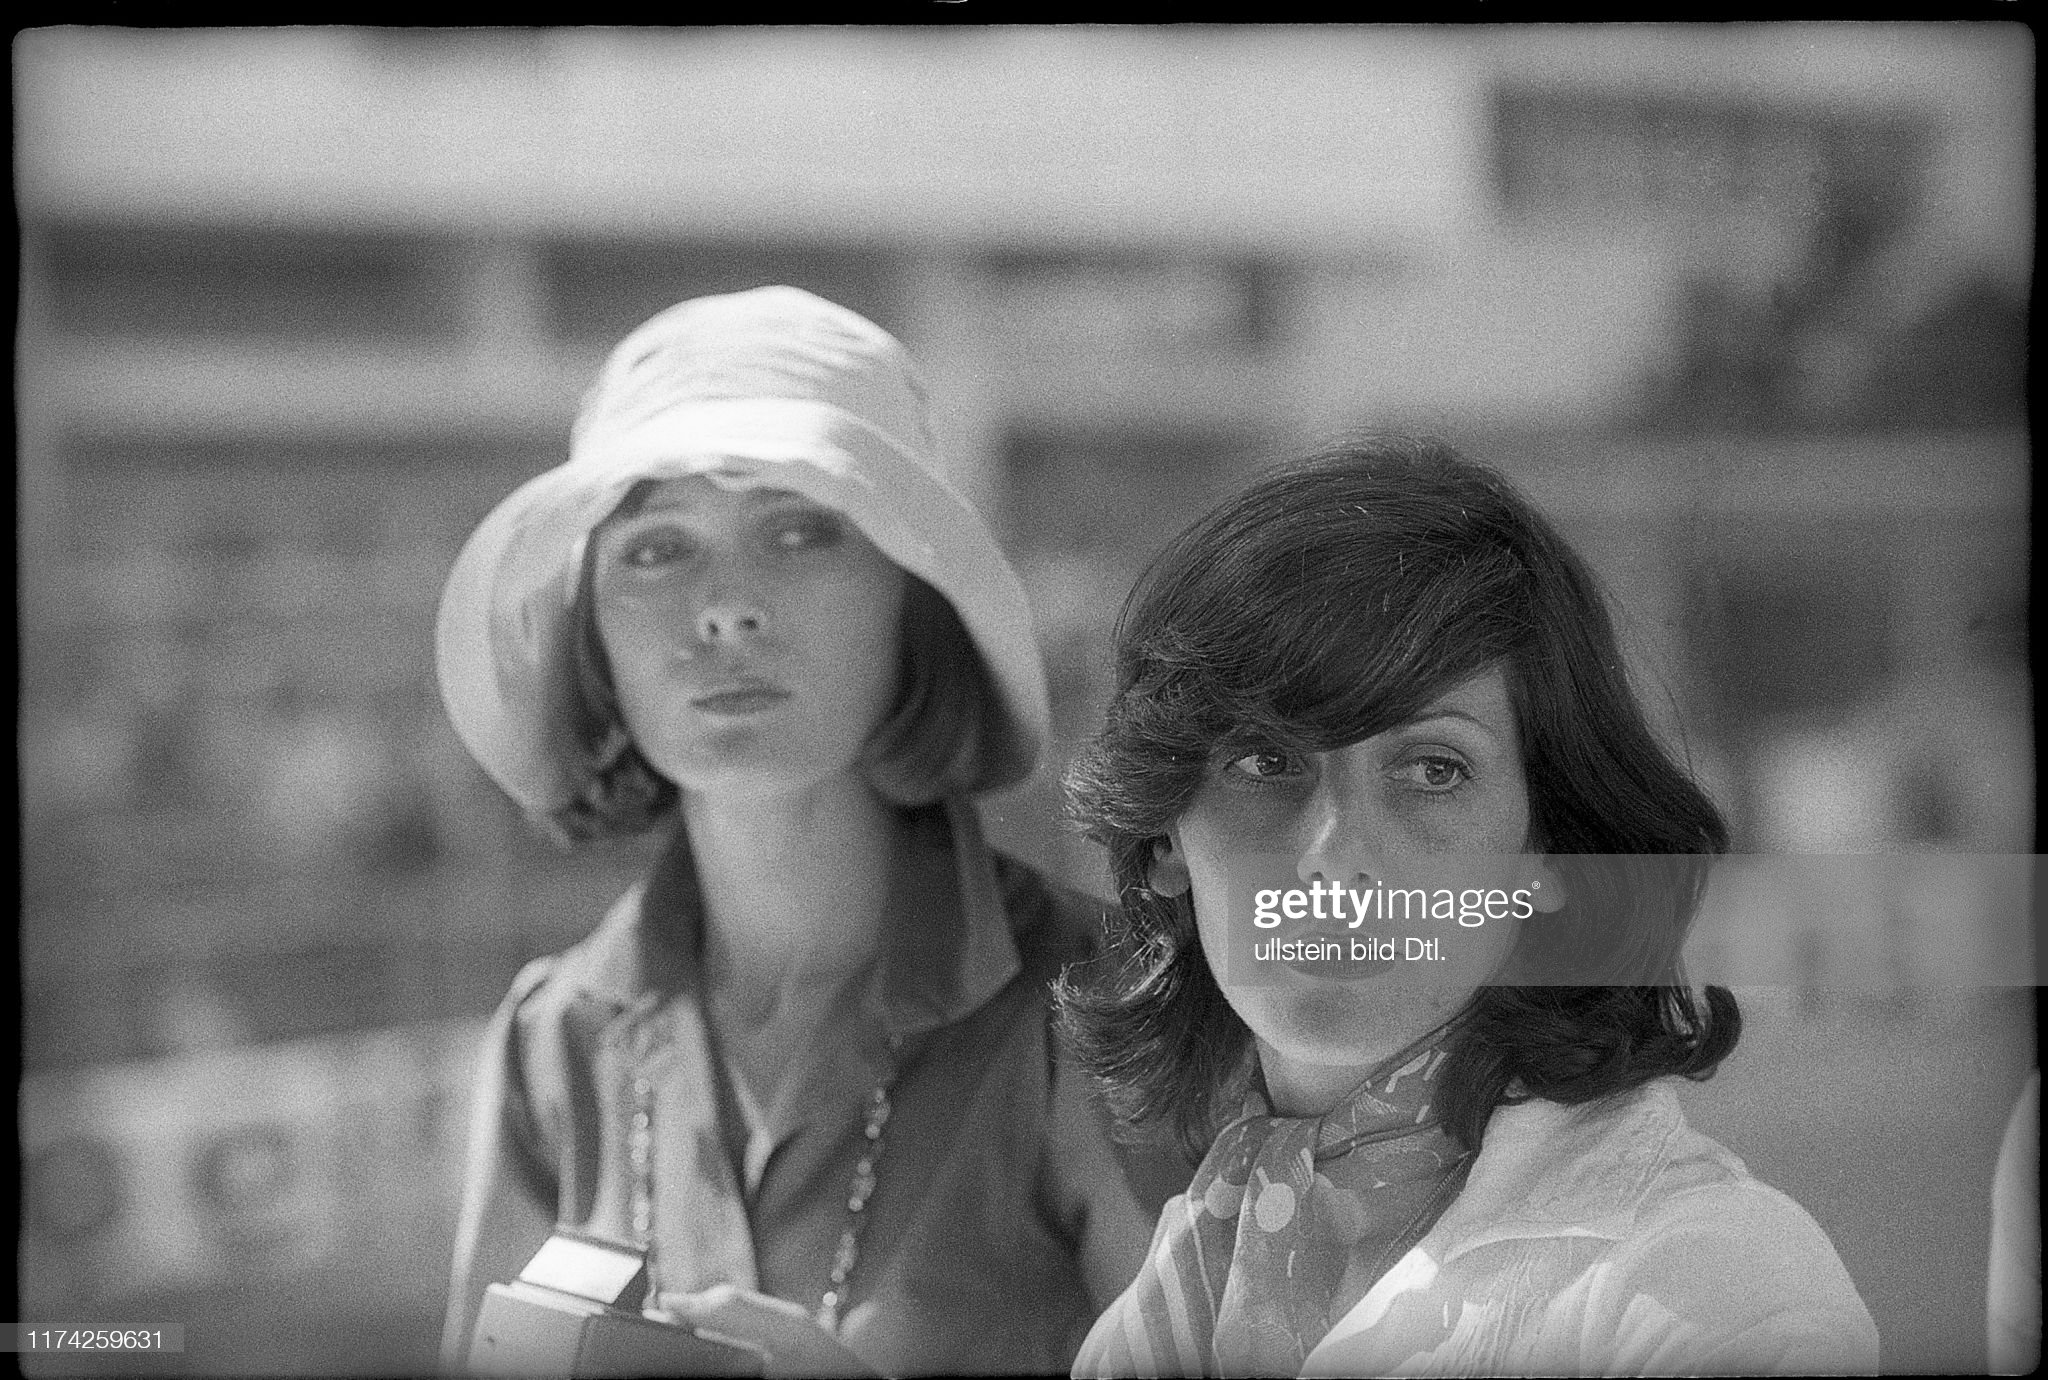 Girls at the Monaco Grand Prix on June 26, 1974.